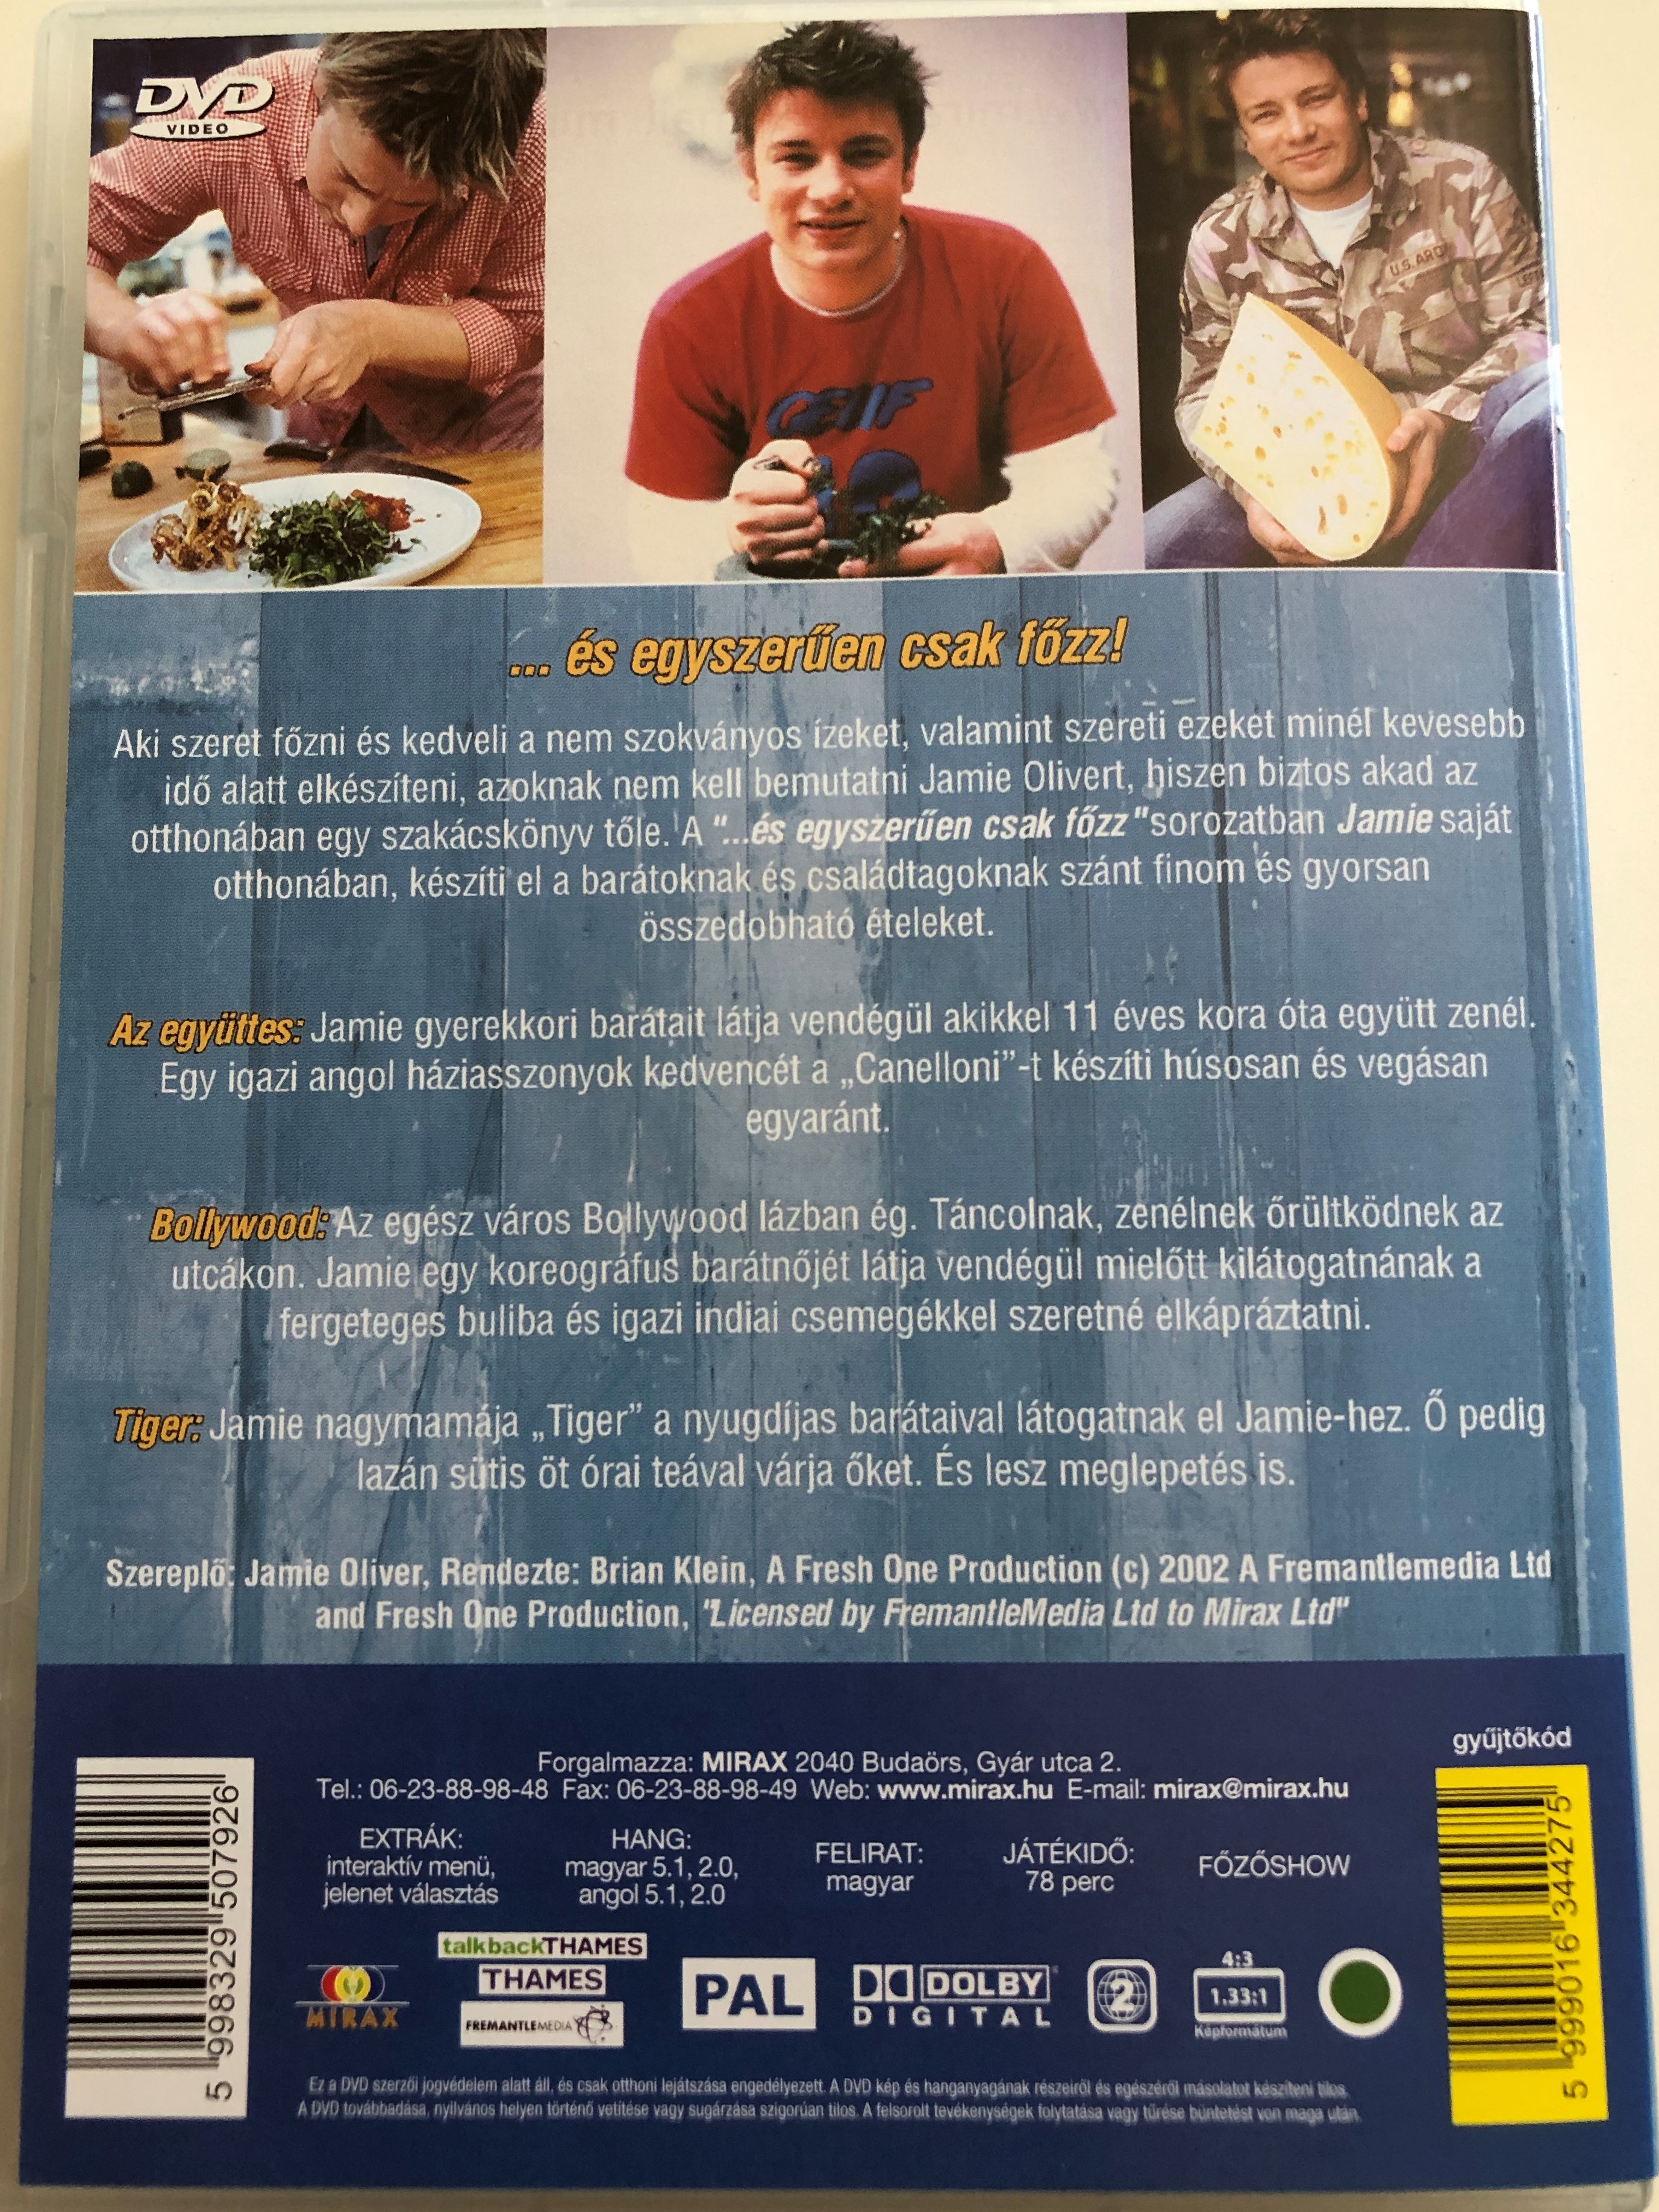 oliver-s-twist-dvd-2002-jamie-oliver-vol.-1-a-puc-r-szak-cs-visszat-r-f-zz-nk-megint-egyszer-en-directed-by-brian-klein-3-episodes-cooking-with-jamie-oliver-2-.jpg